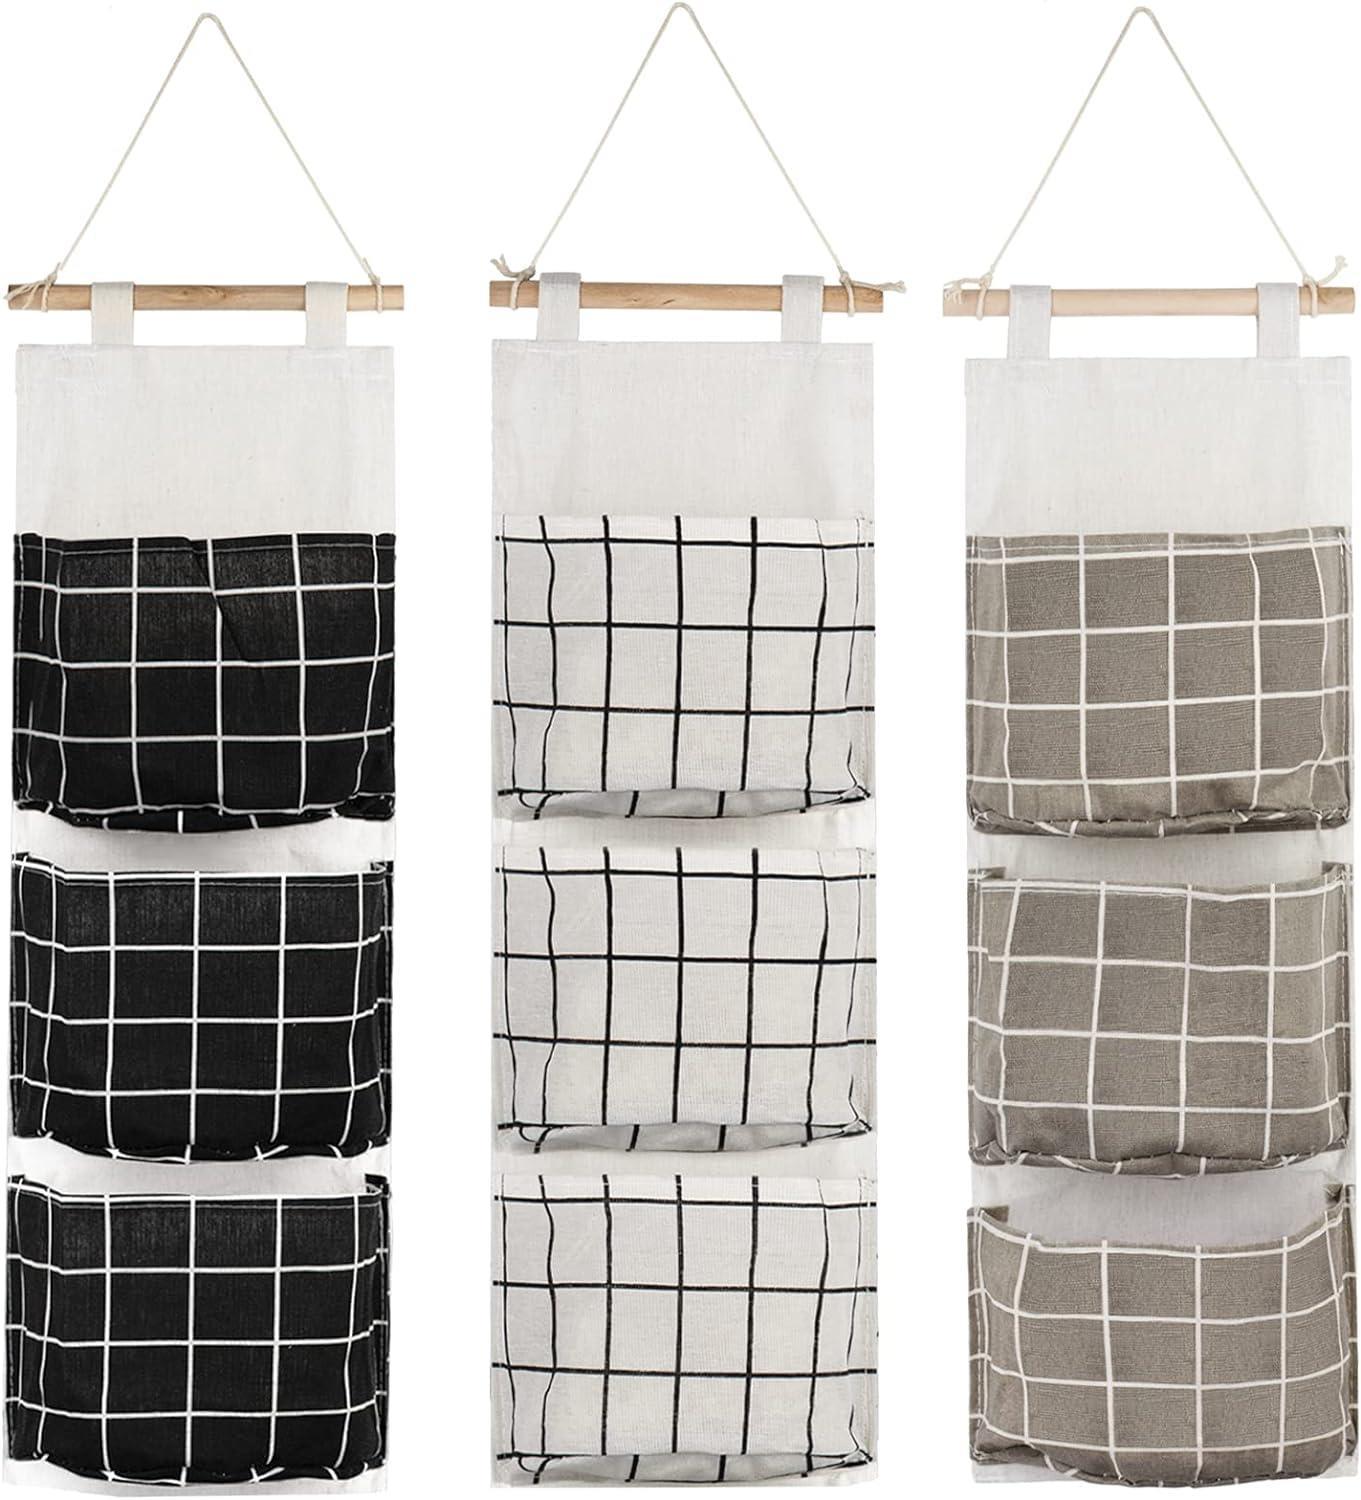 Shower caddies 3Pcs Hanging Storage Bag with 3 Pockets, Fabric Wall Shelf Basket Organizer Storage Pouch - Waterproof & Stylish (Black / Gray / White)